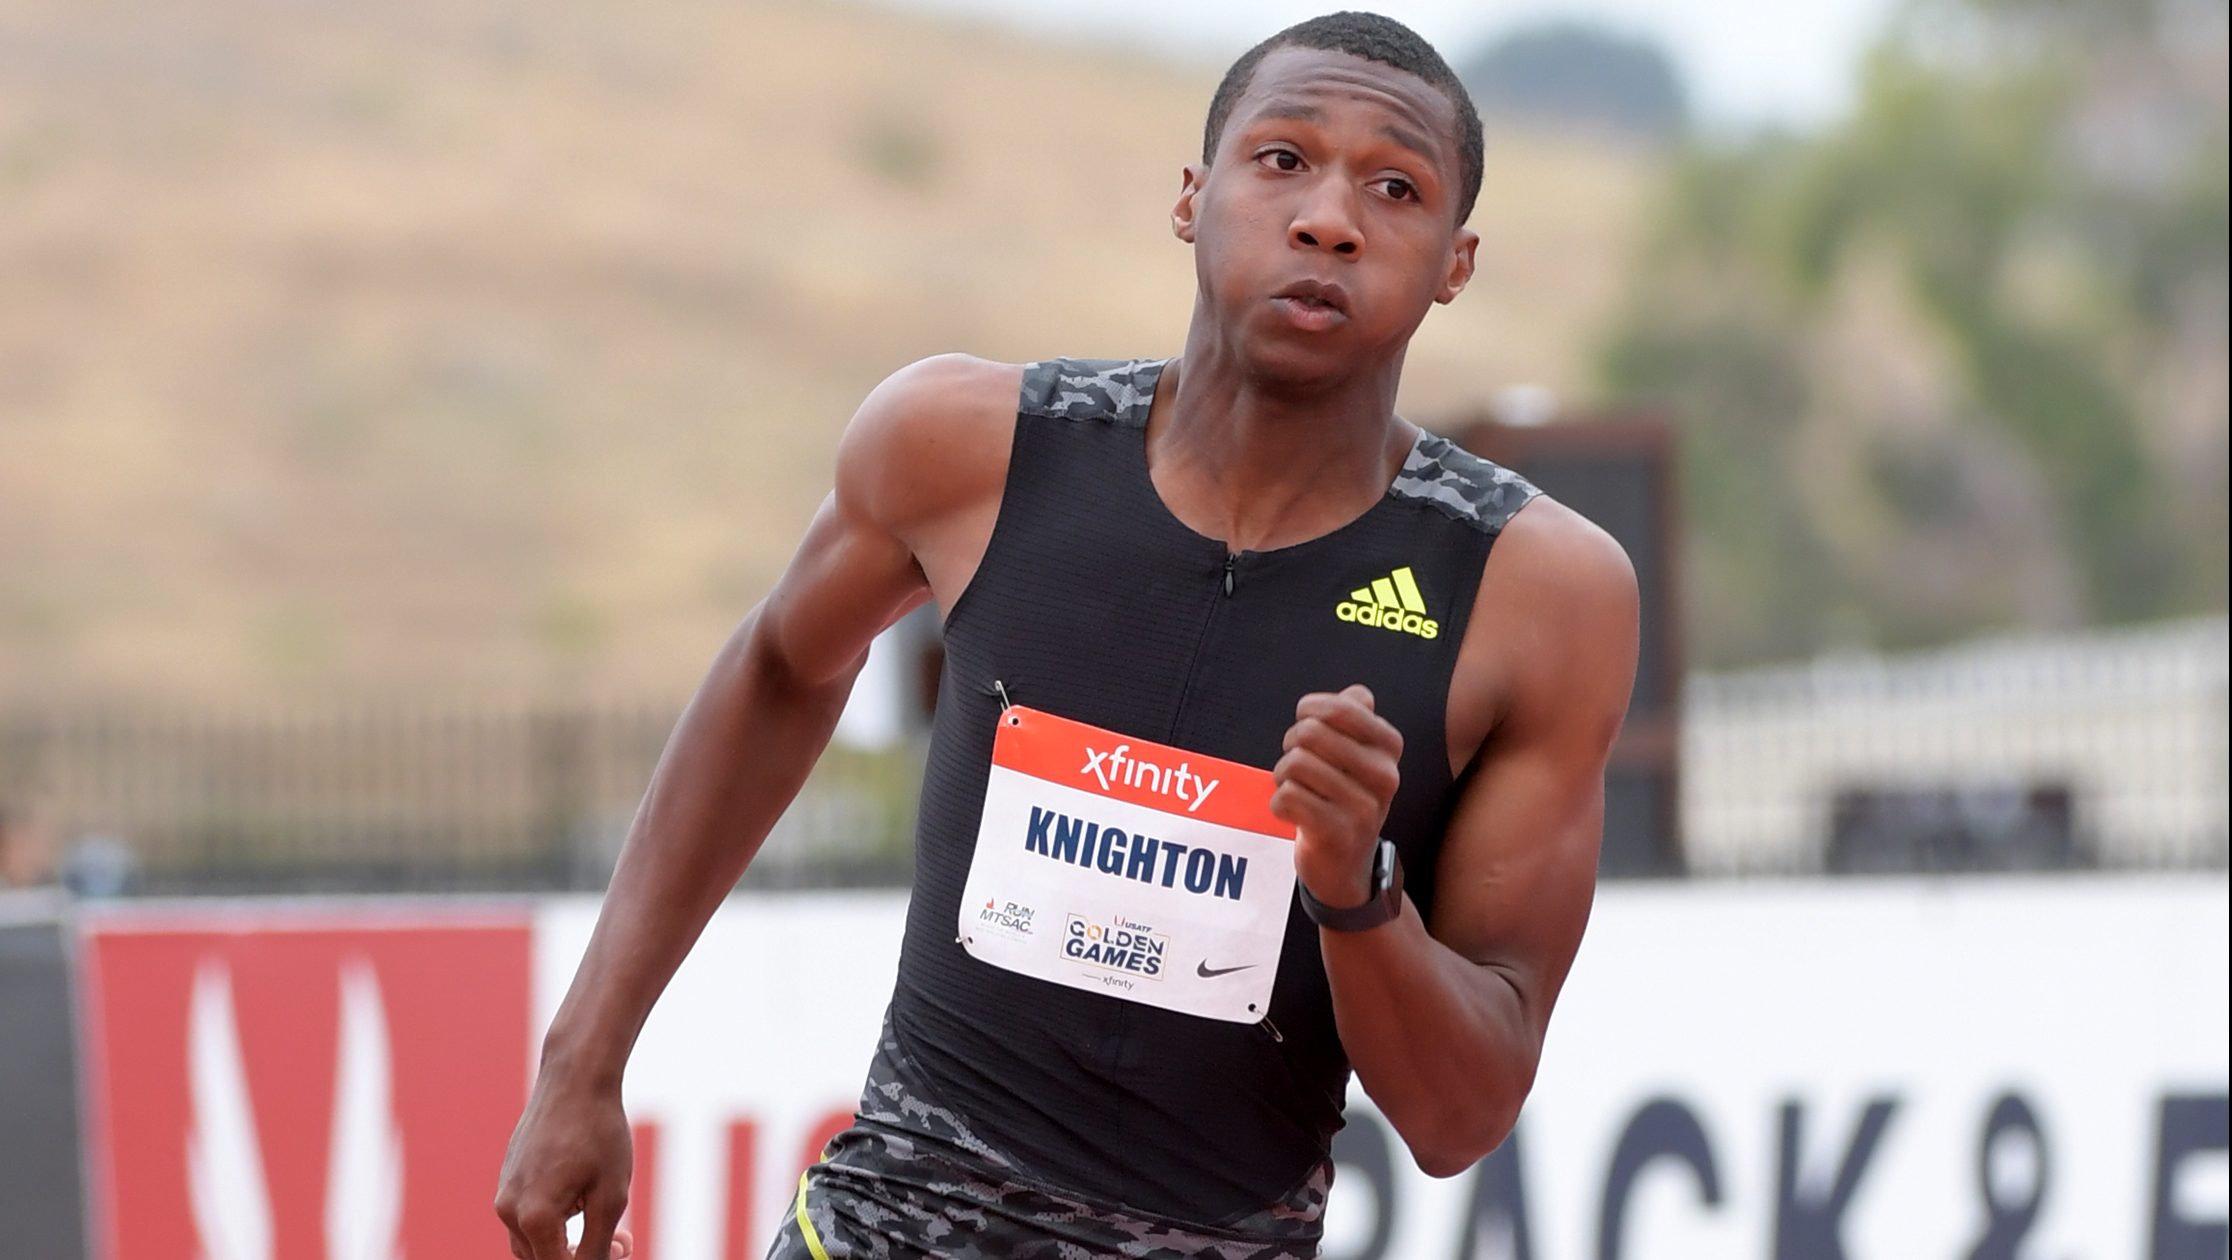 VIDEO: American sprinter Erriyon Knighton breaks Usain Bolt record